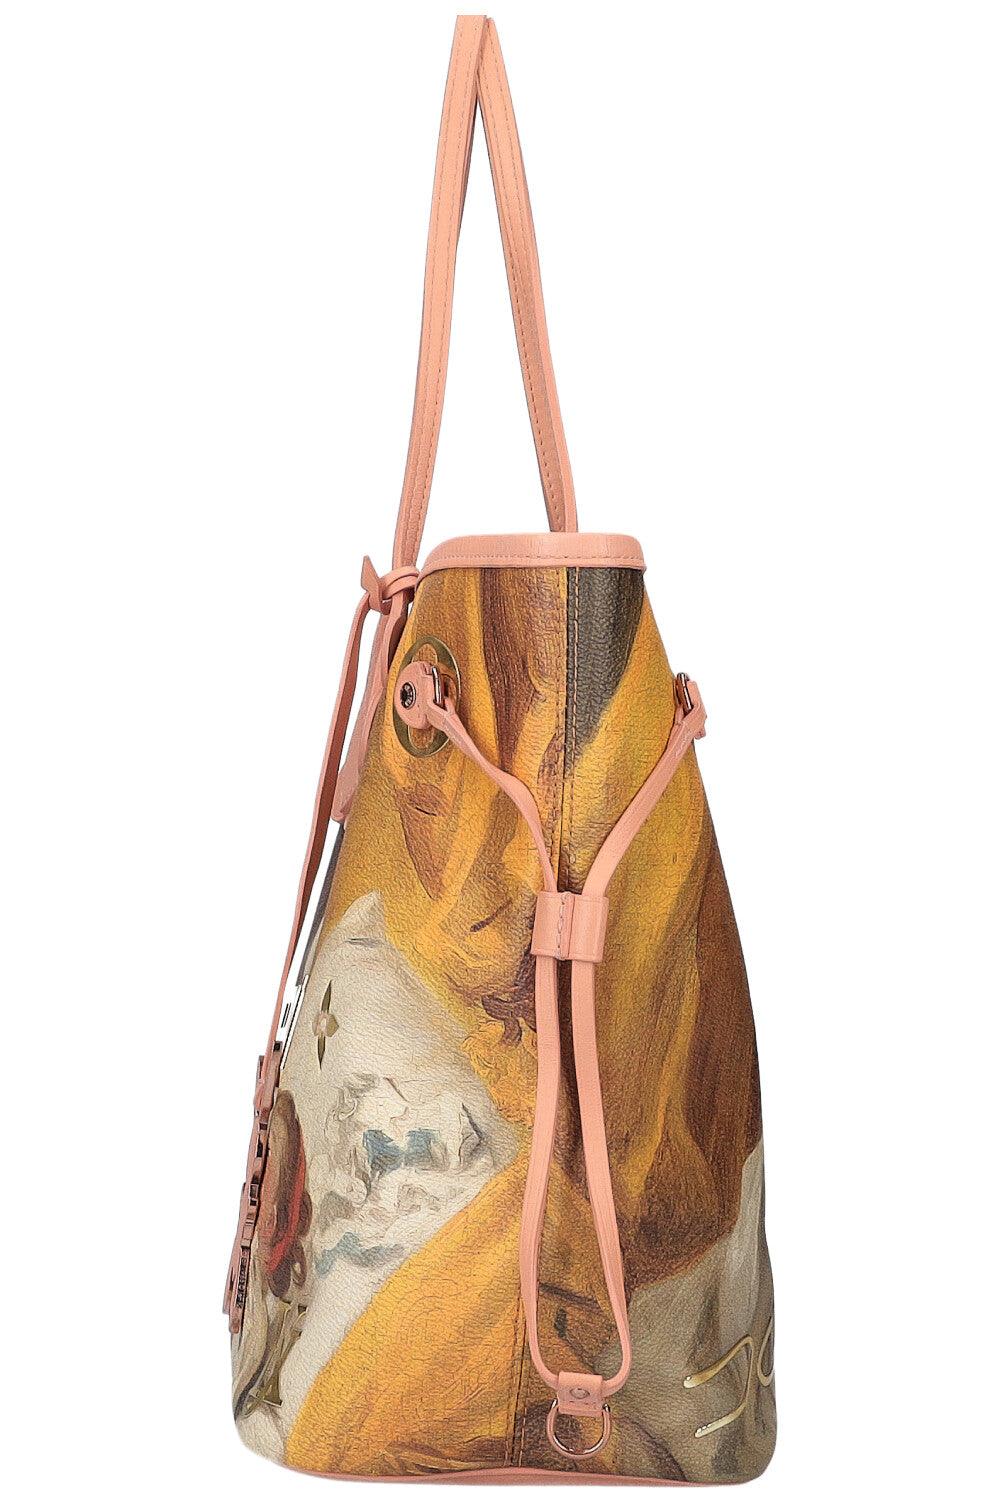 Louis Vuitton Jeff Koons Master Collection Fragonard Neverfull MM Tote Bag